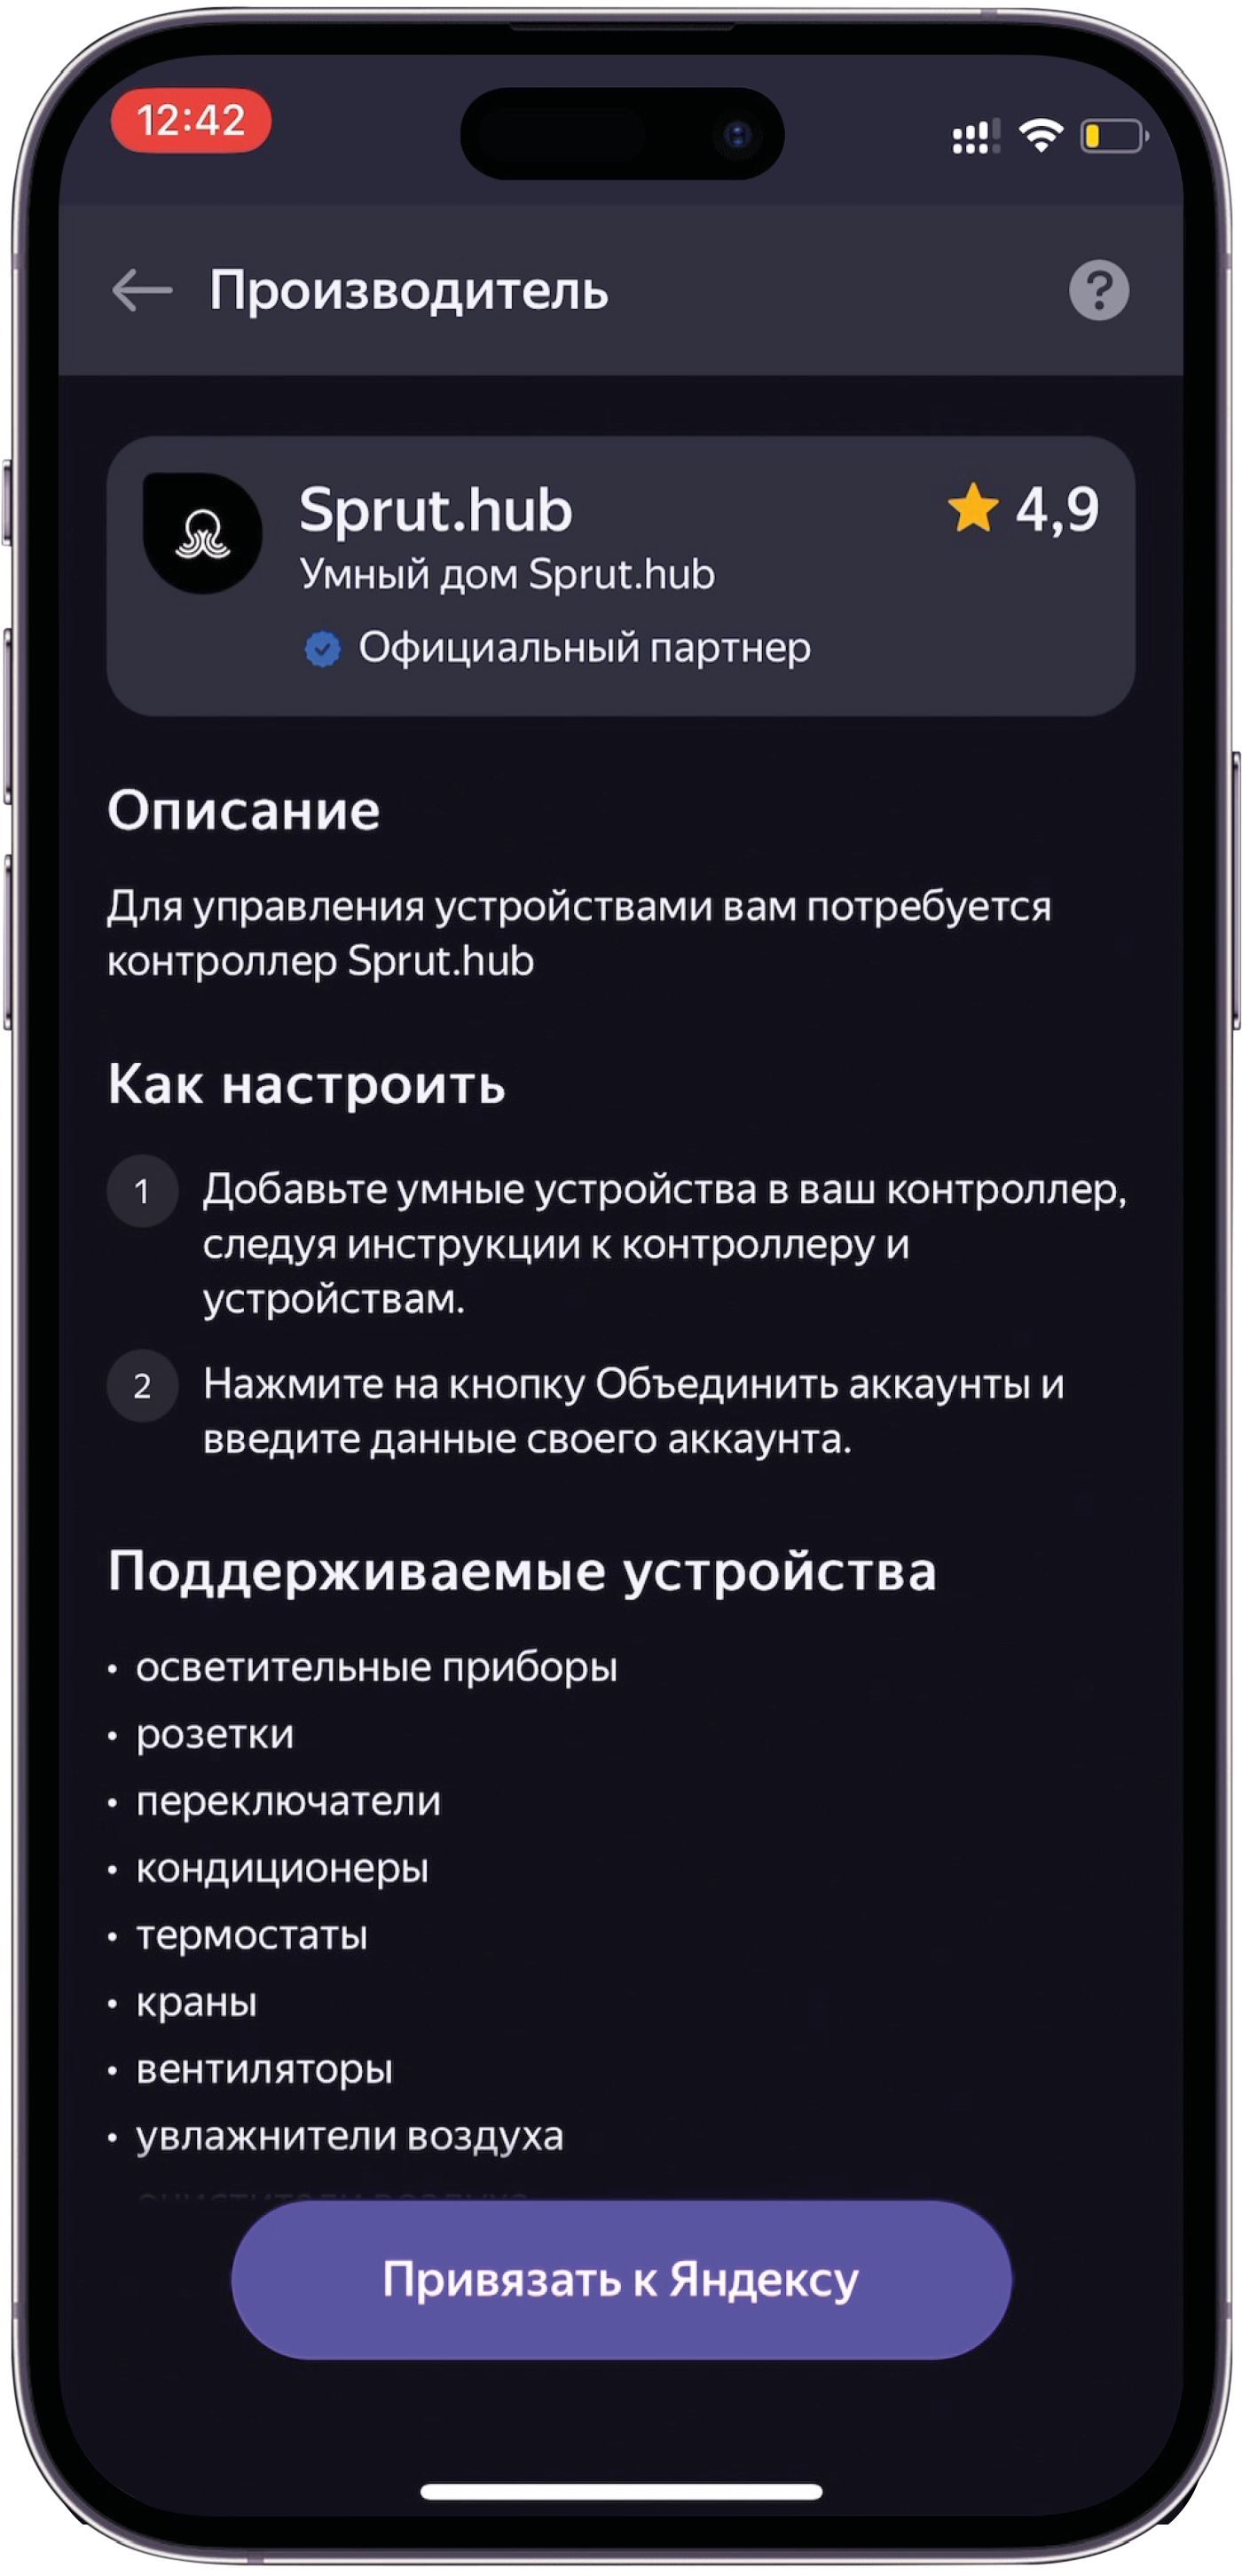 Нажимаем кнопку “Привязать к Яндексу”. 